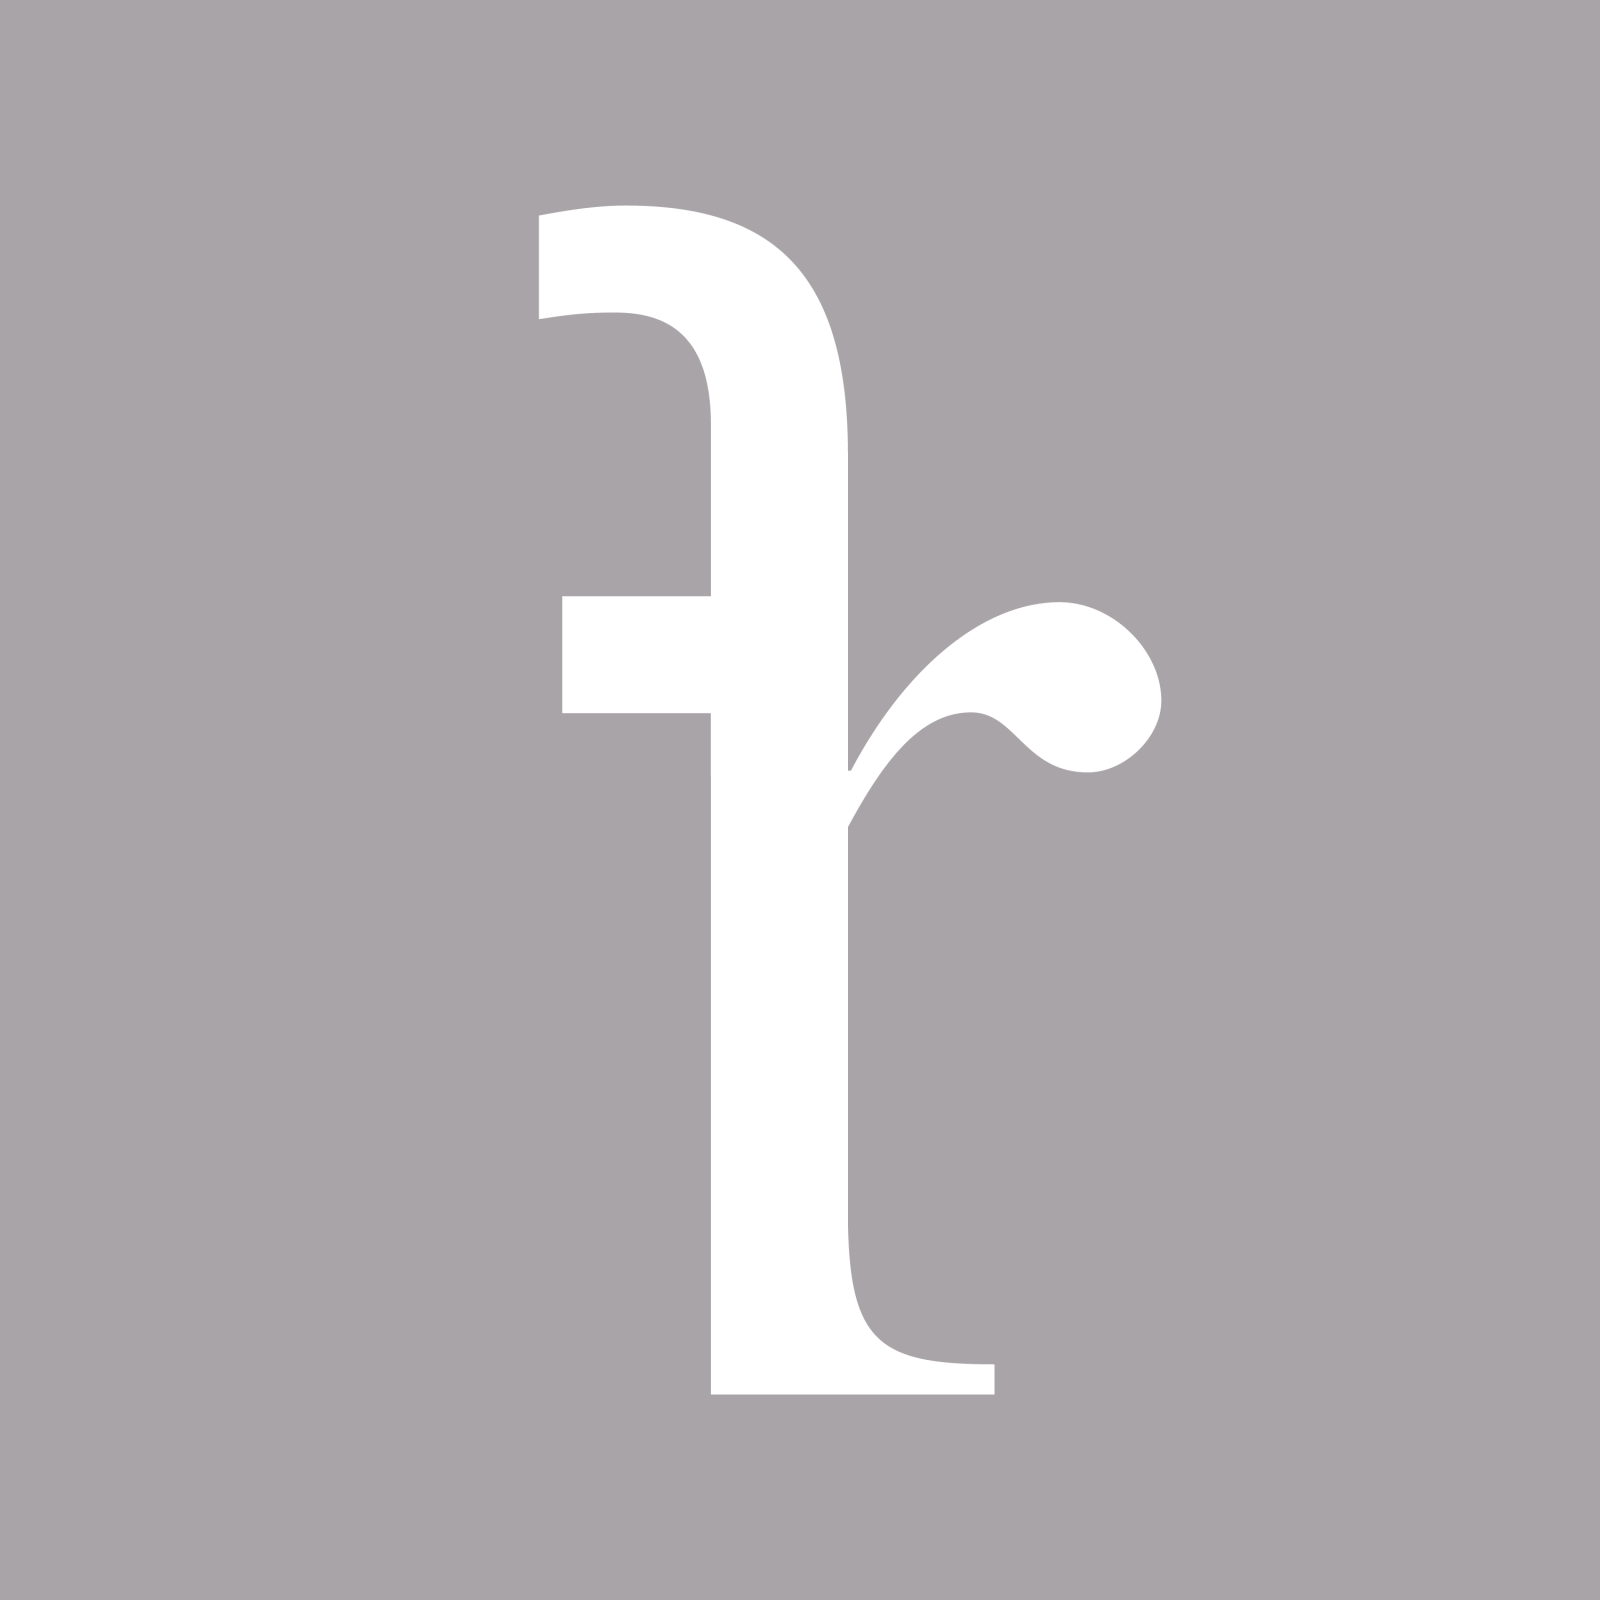 verzwhattet logo fondation riklin